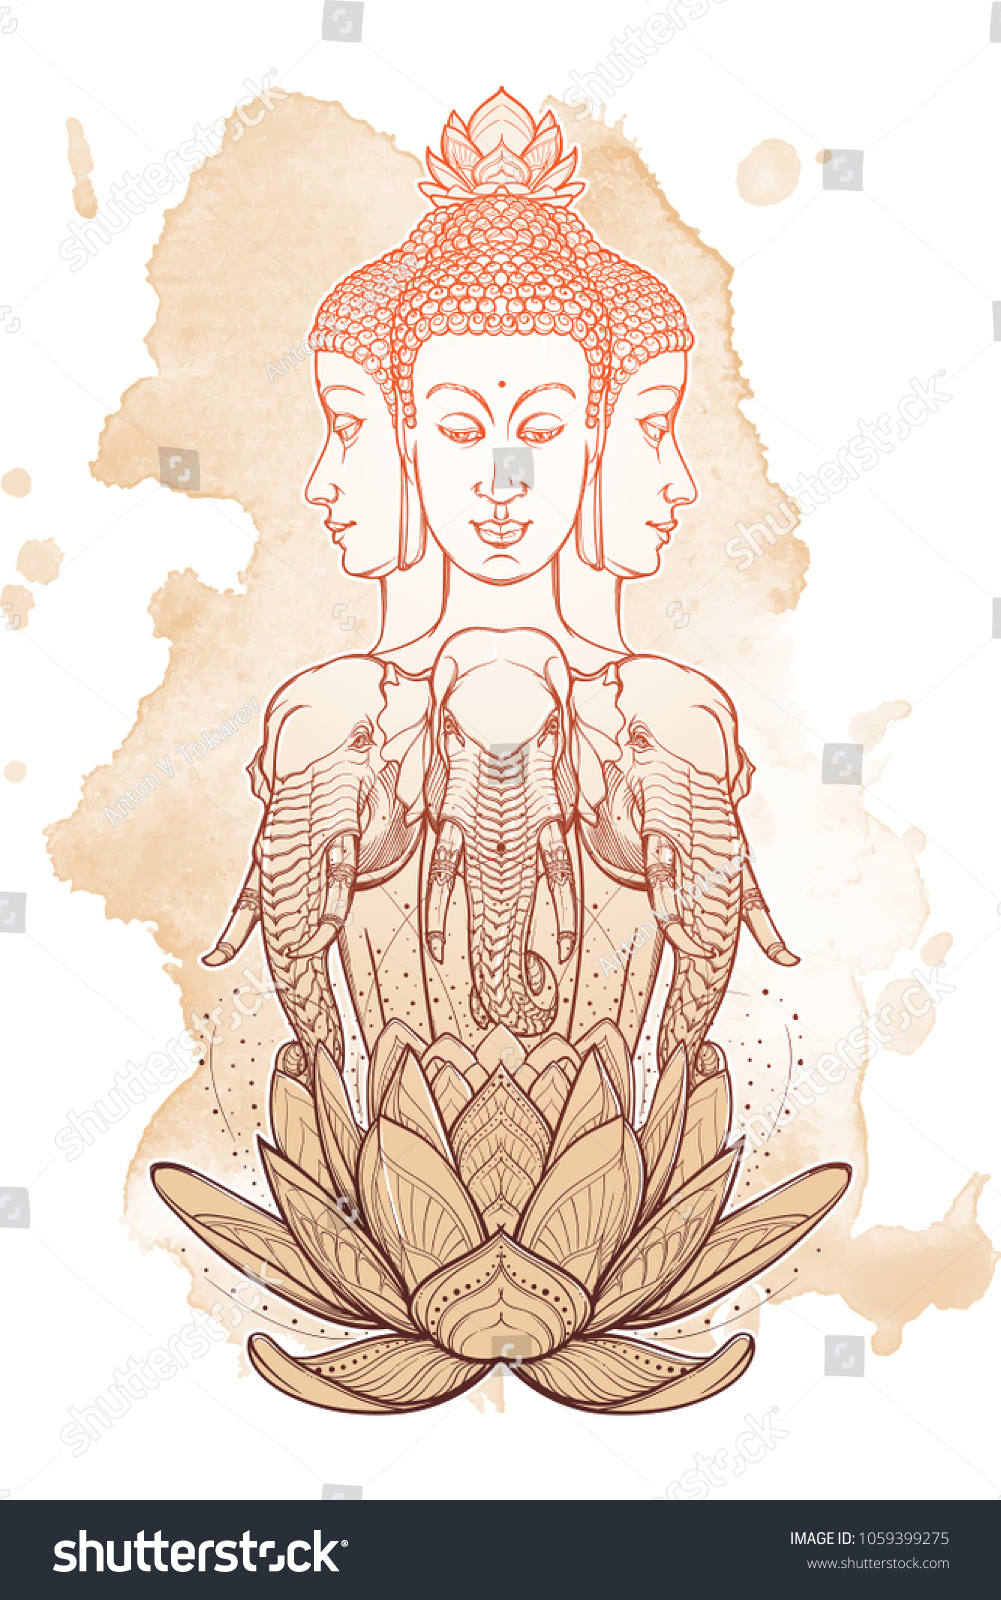 SVG of Statue representing Trimurti - trinity of Hindu gods Brahma, Vishnu and Shiva, sitting on three elephants. Intricate hand drawing isolated on textured background. Tattoo design. EPS10 vector svg